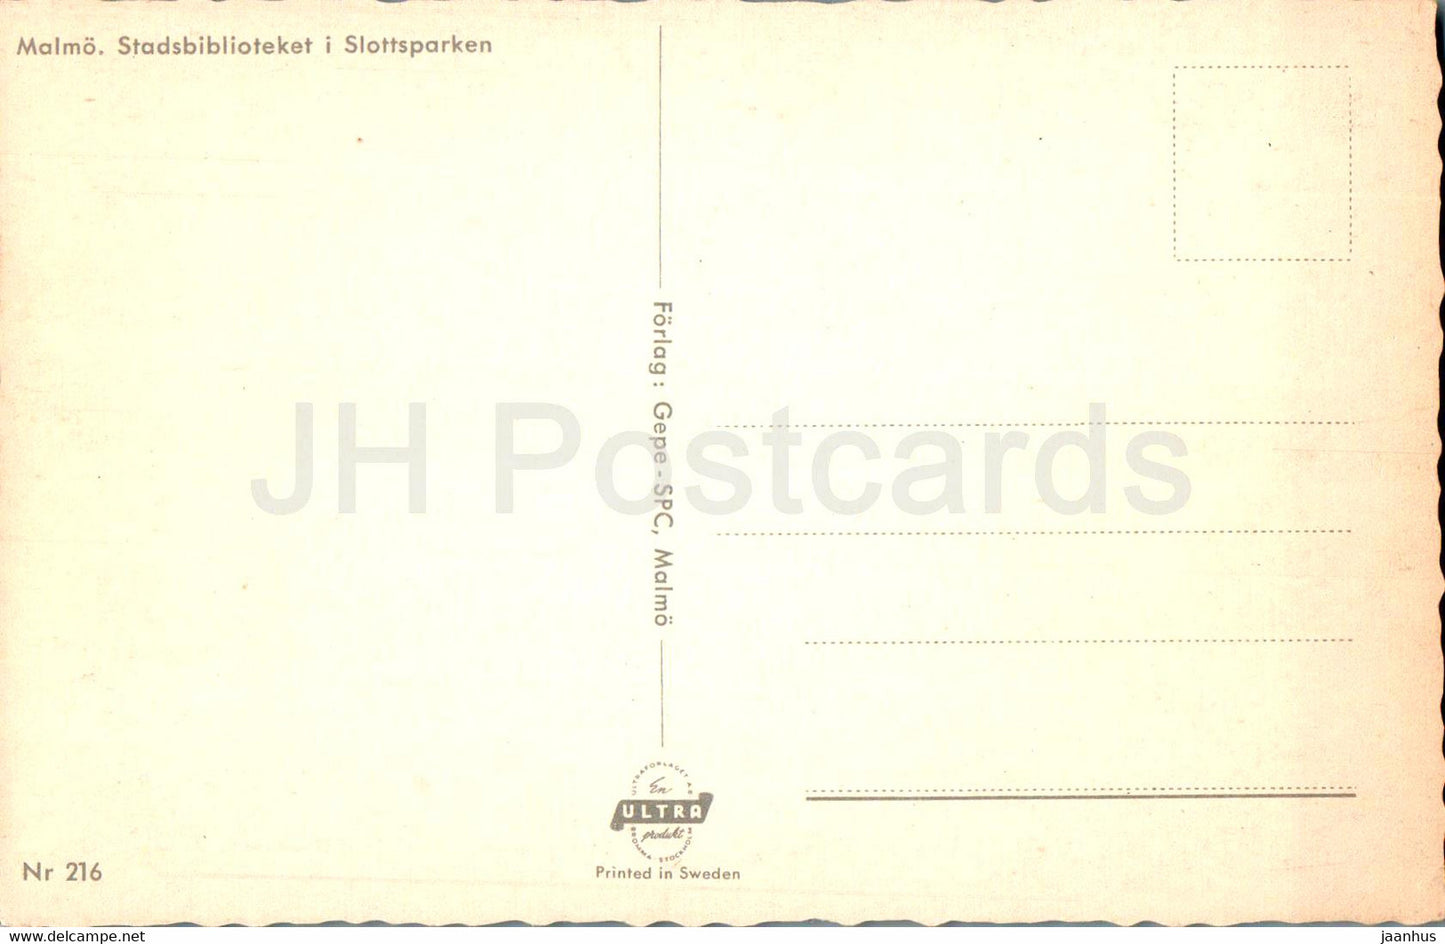 Malmo - Stadsbiblioteket i Slottsparken - tram - bibliothèque - 216 - carte postale ancienne - Suède - inutilisée